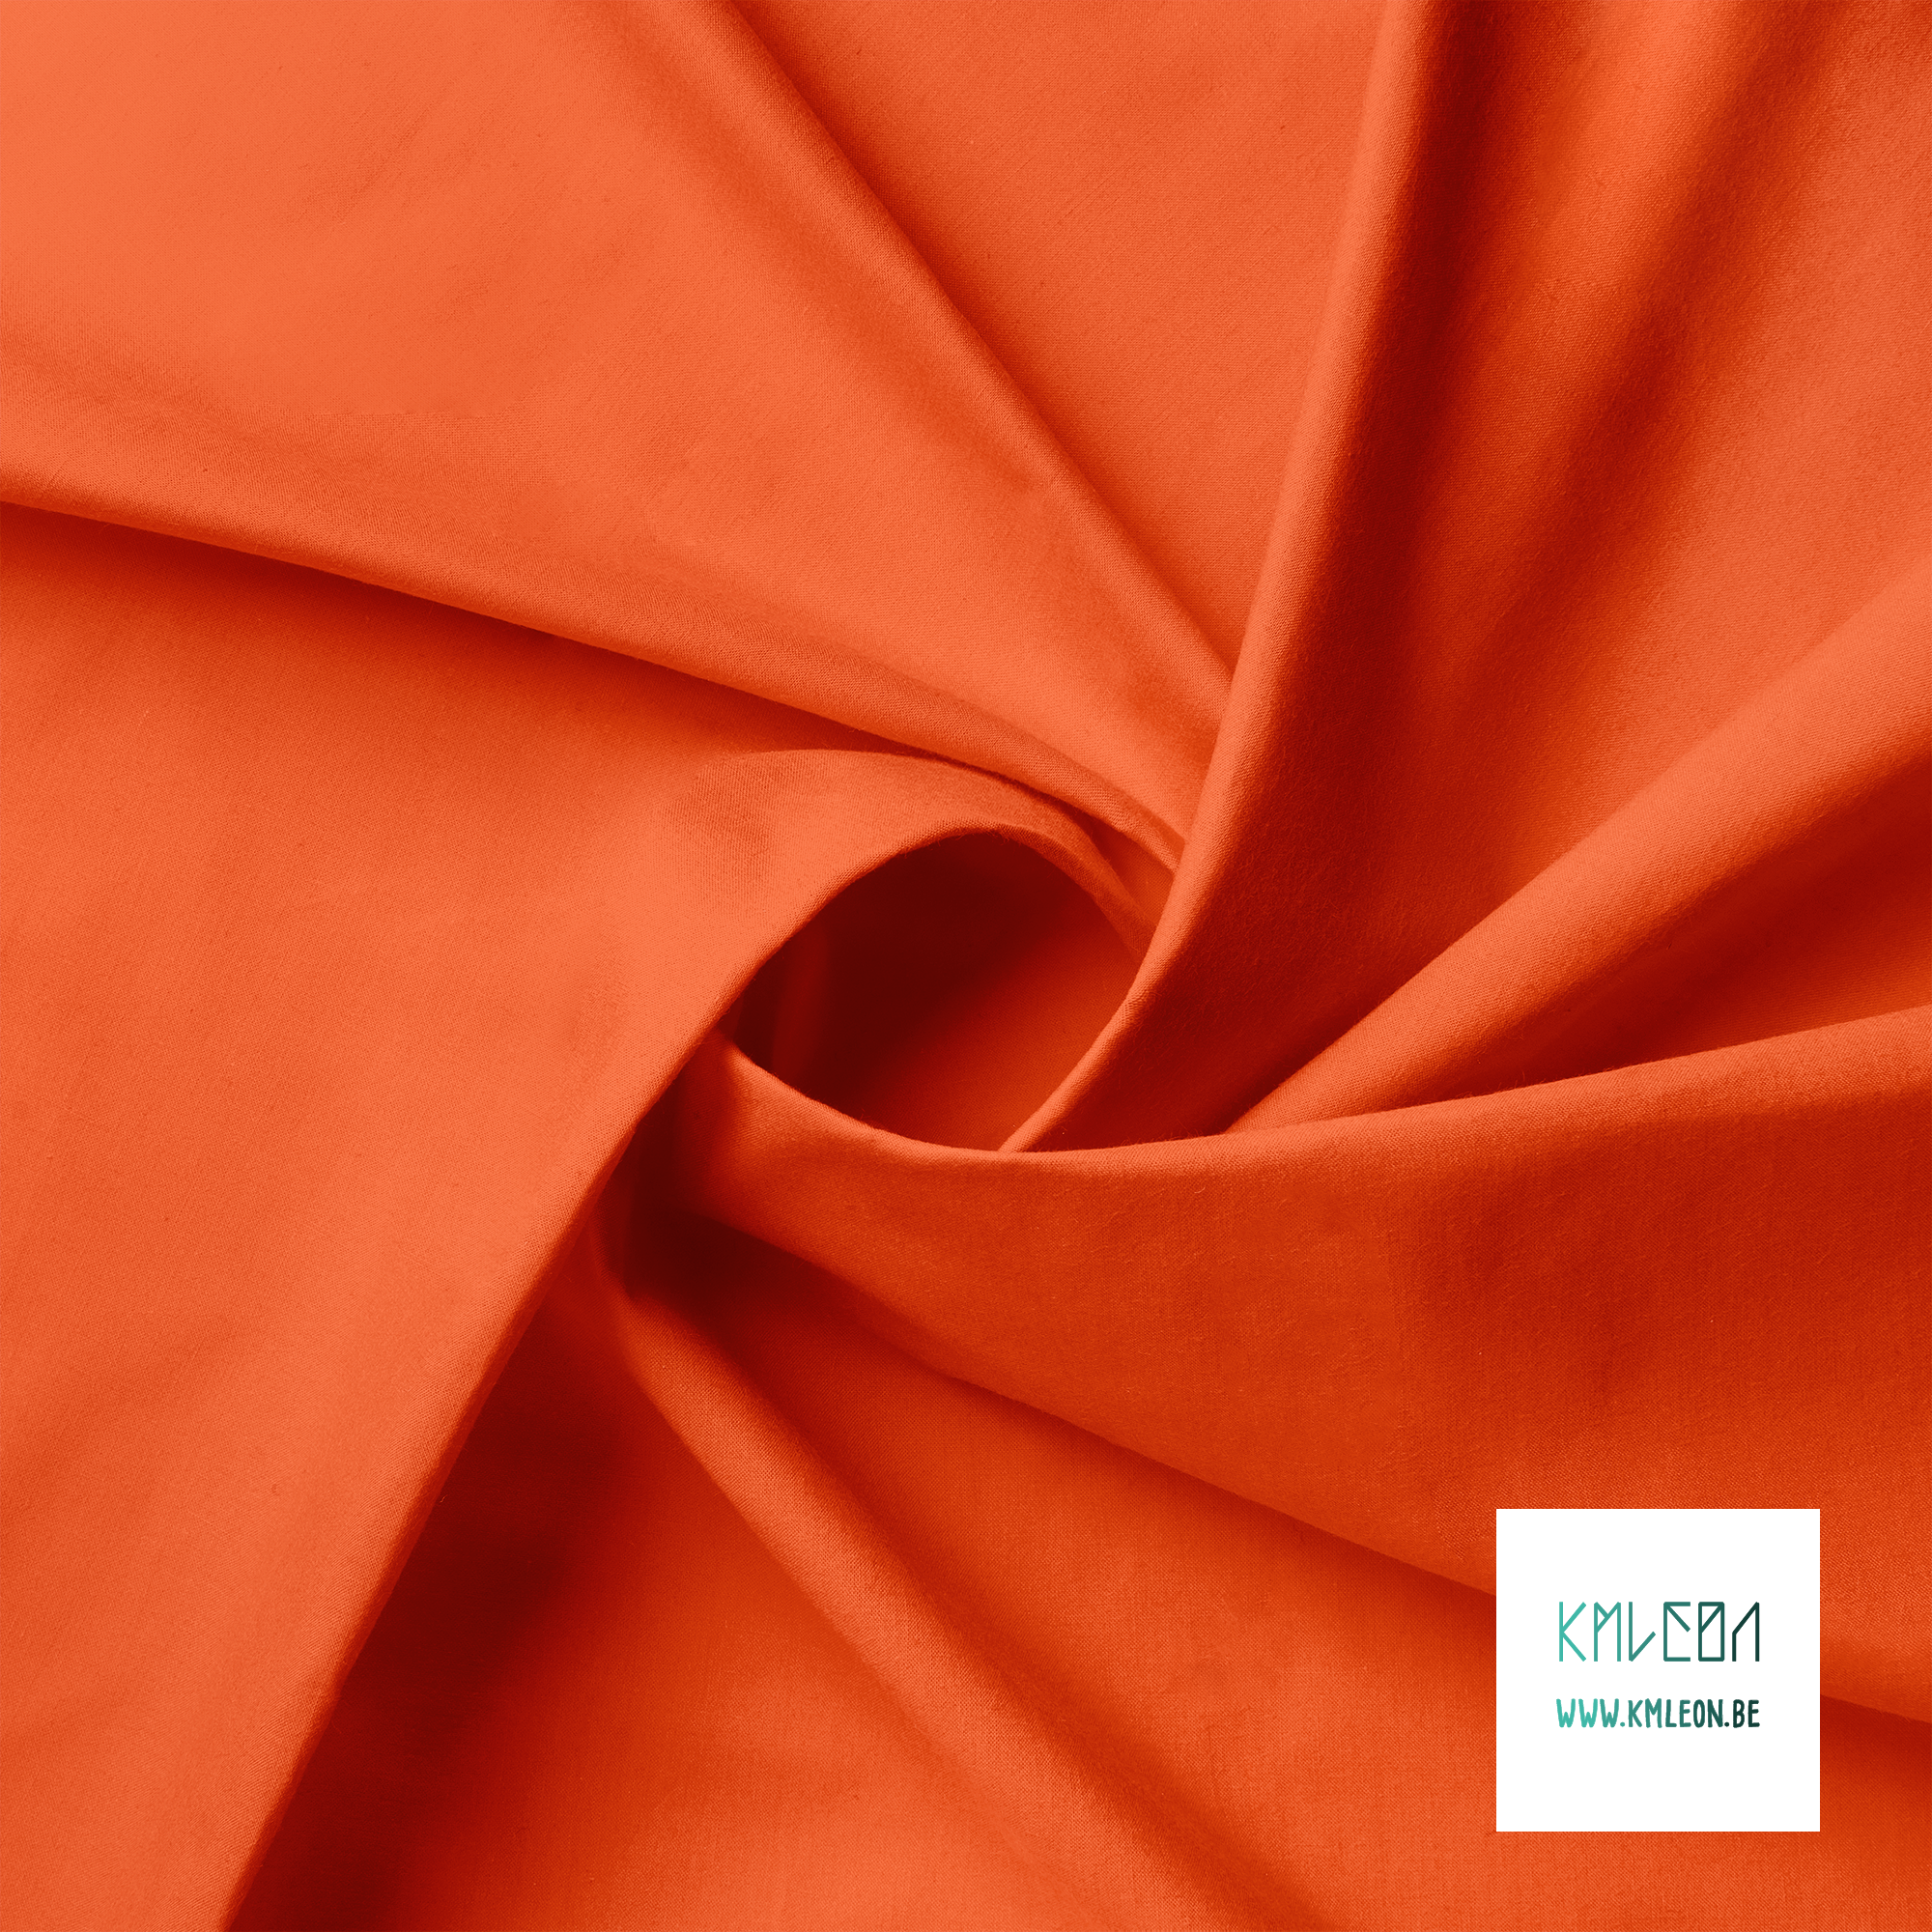 Solid red orange fabric